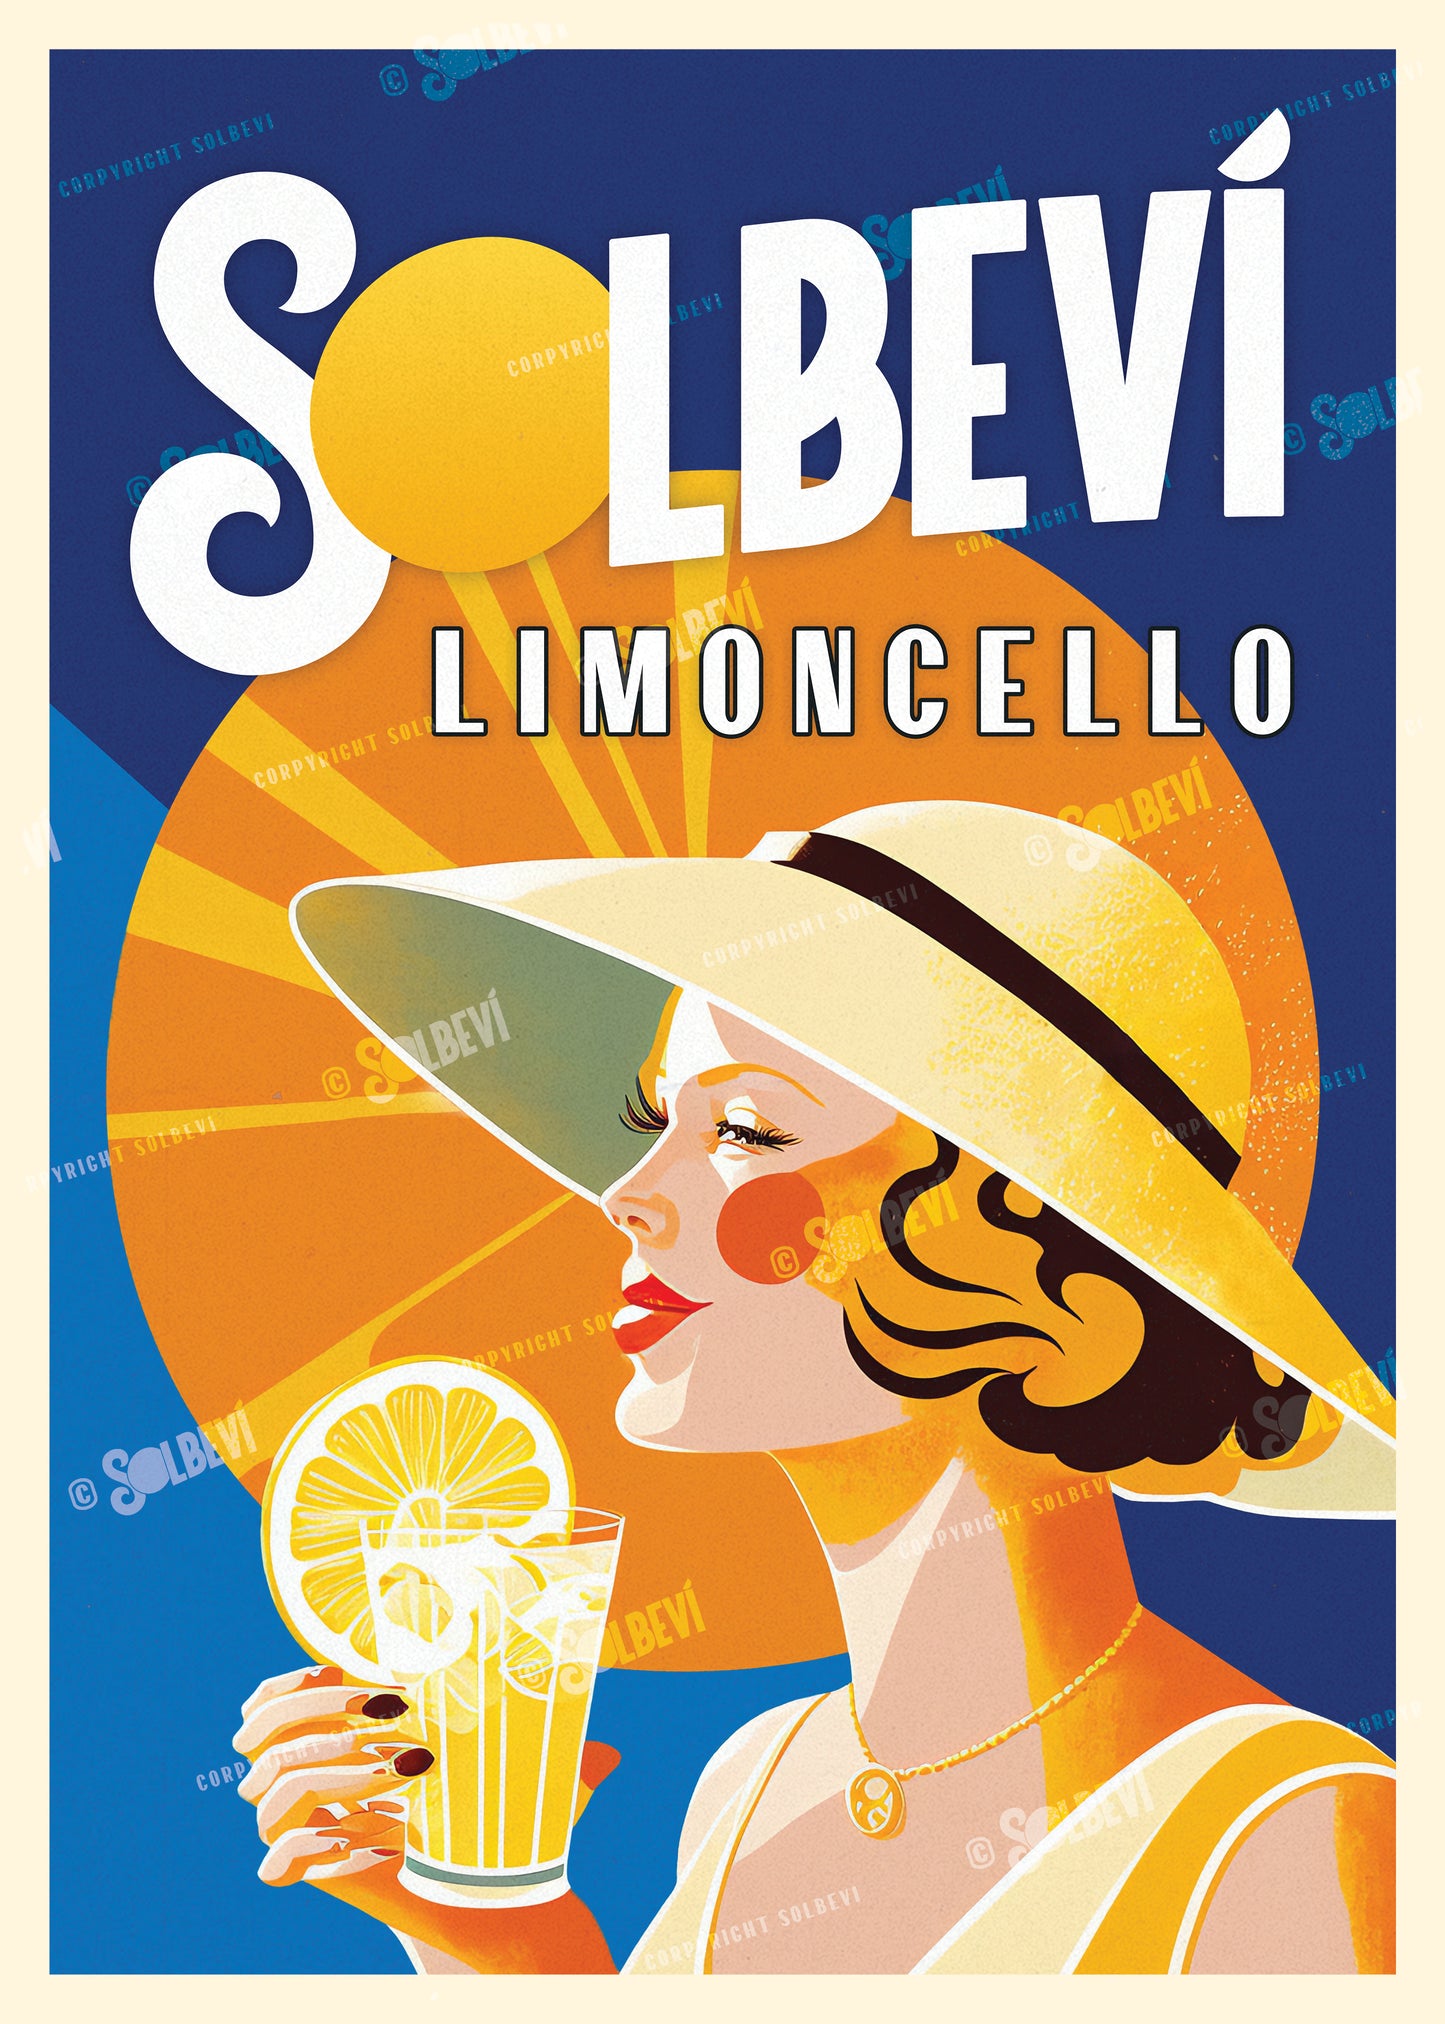 Limoncello Spritz Summer Italy Vintage Poster Art